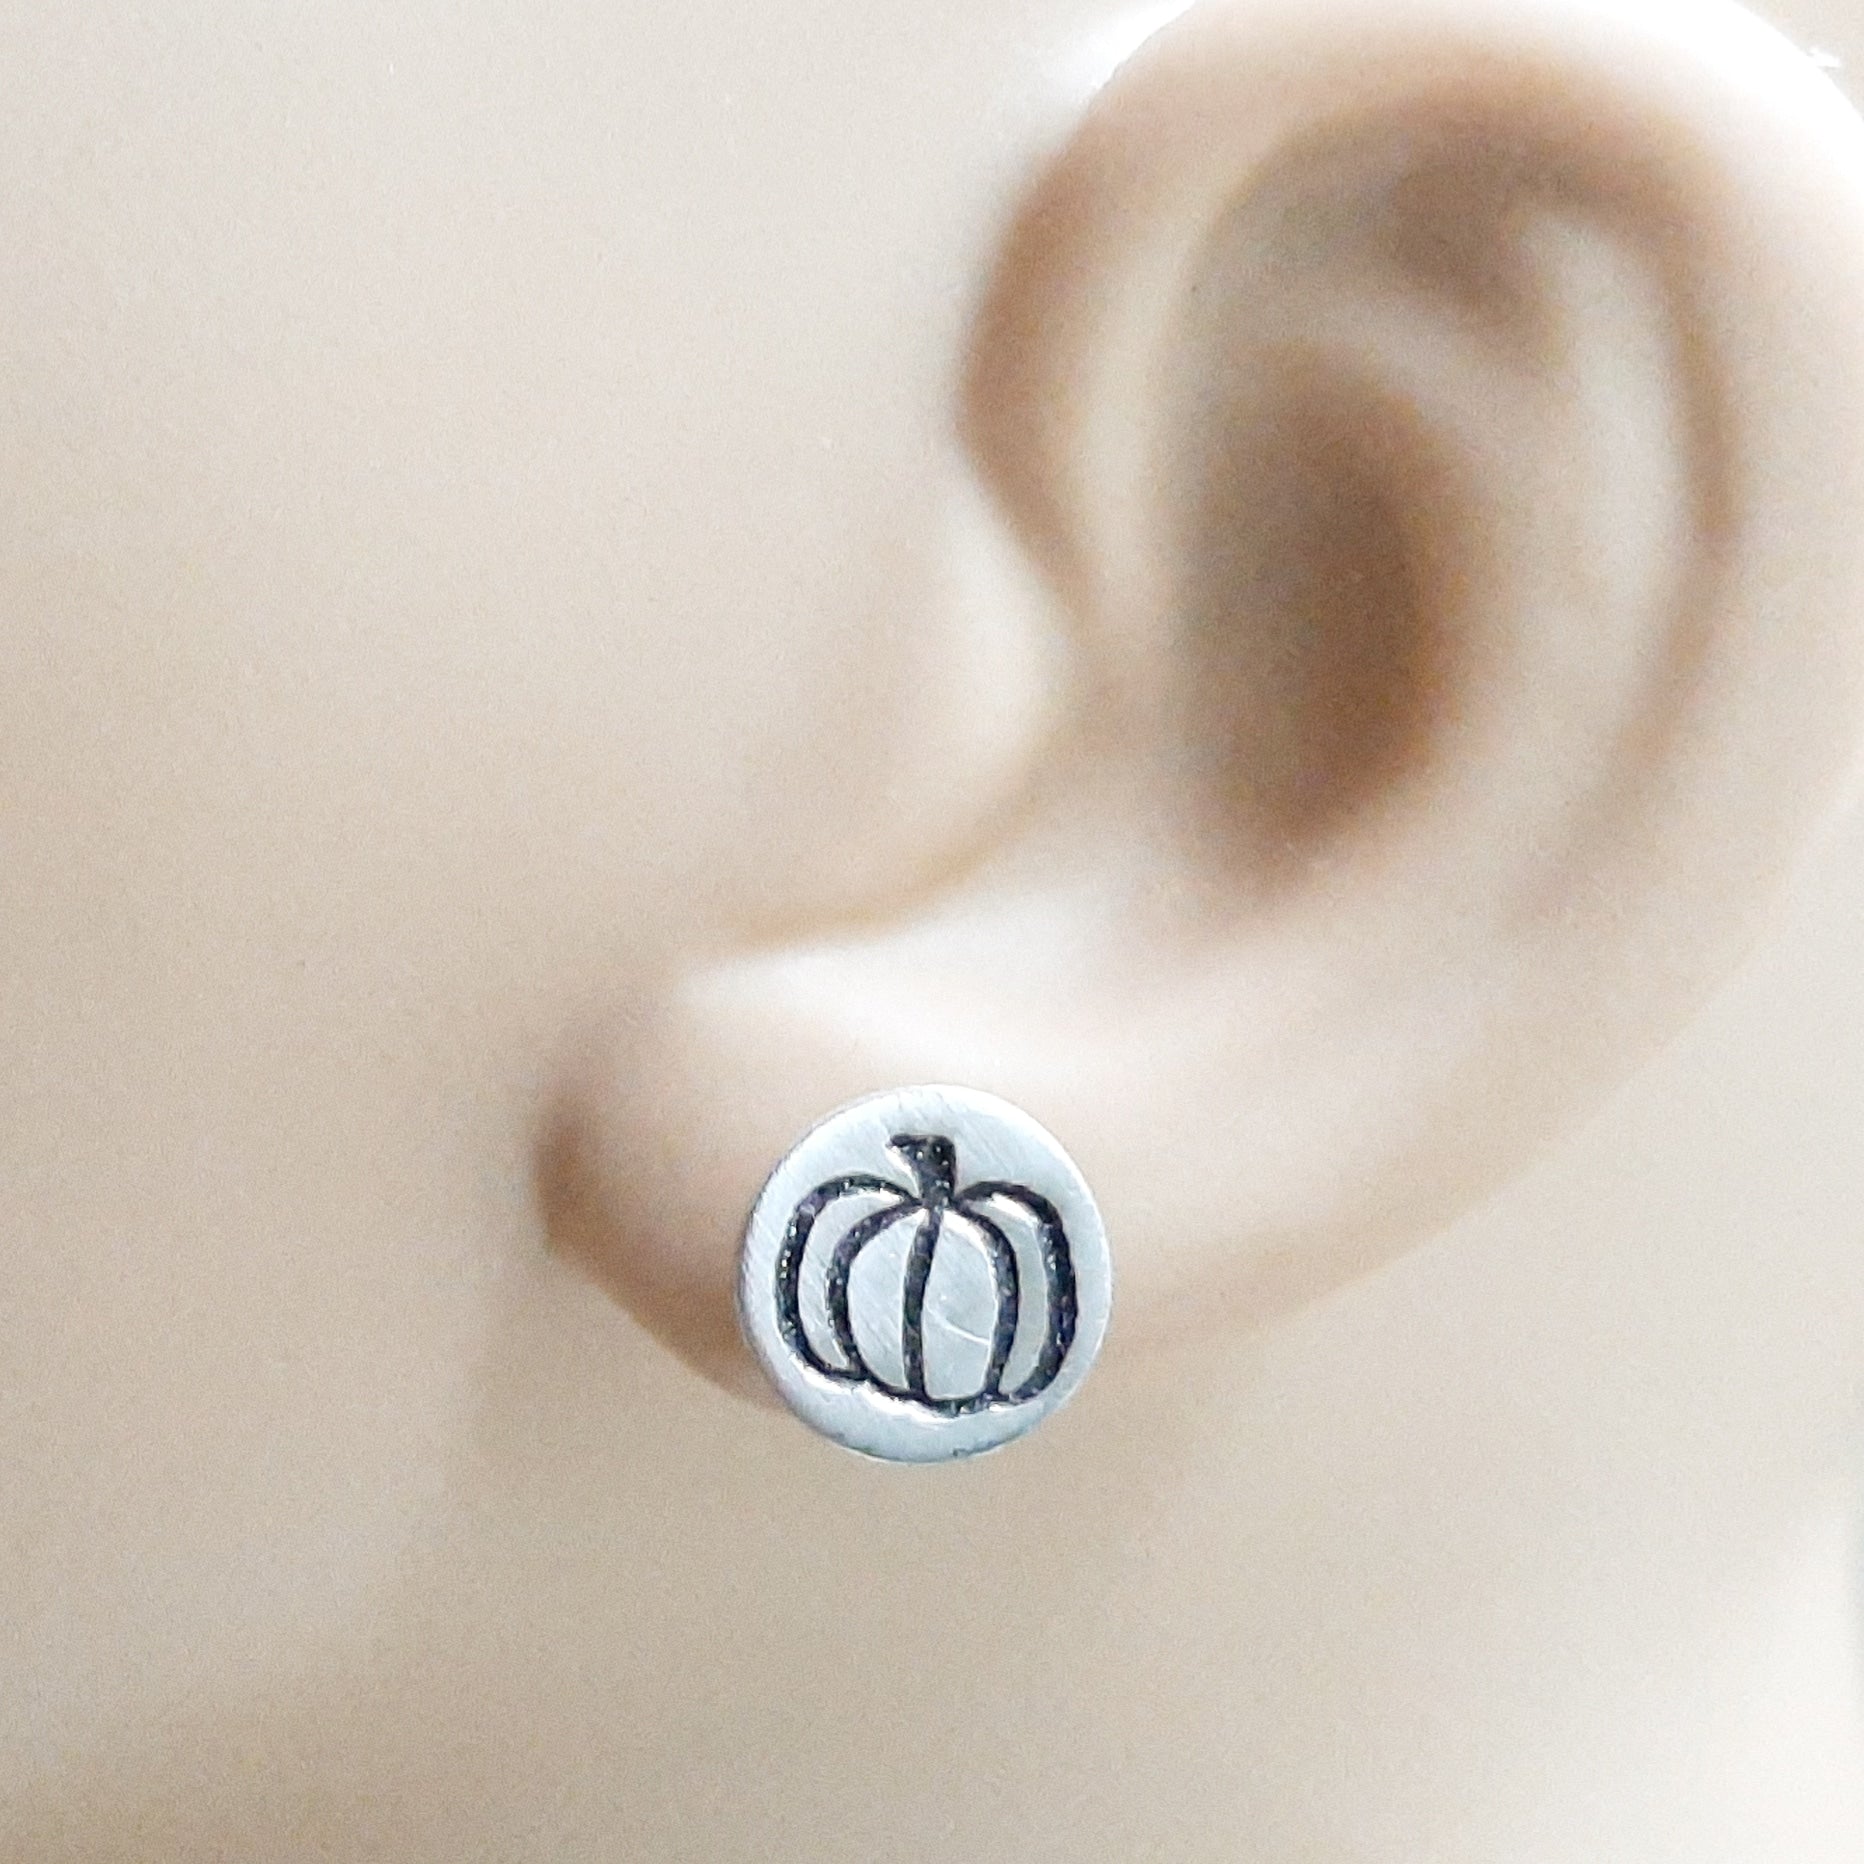 Pumpkin Stud Earrings 9mm - Hypoallergenic Titanium Posts